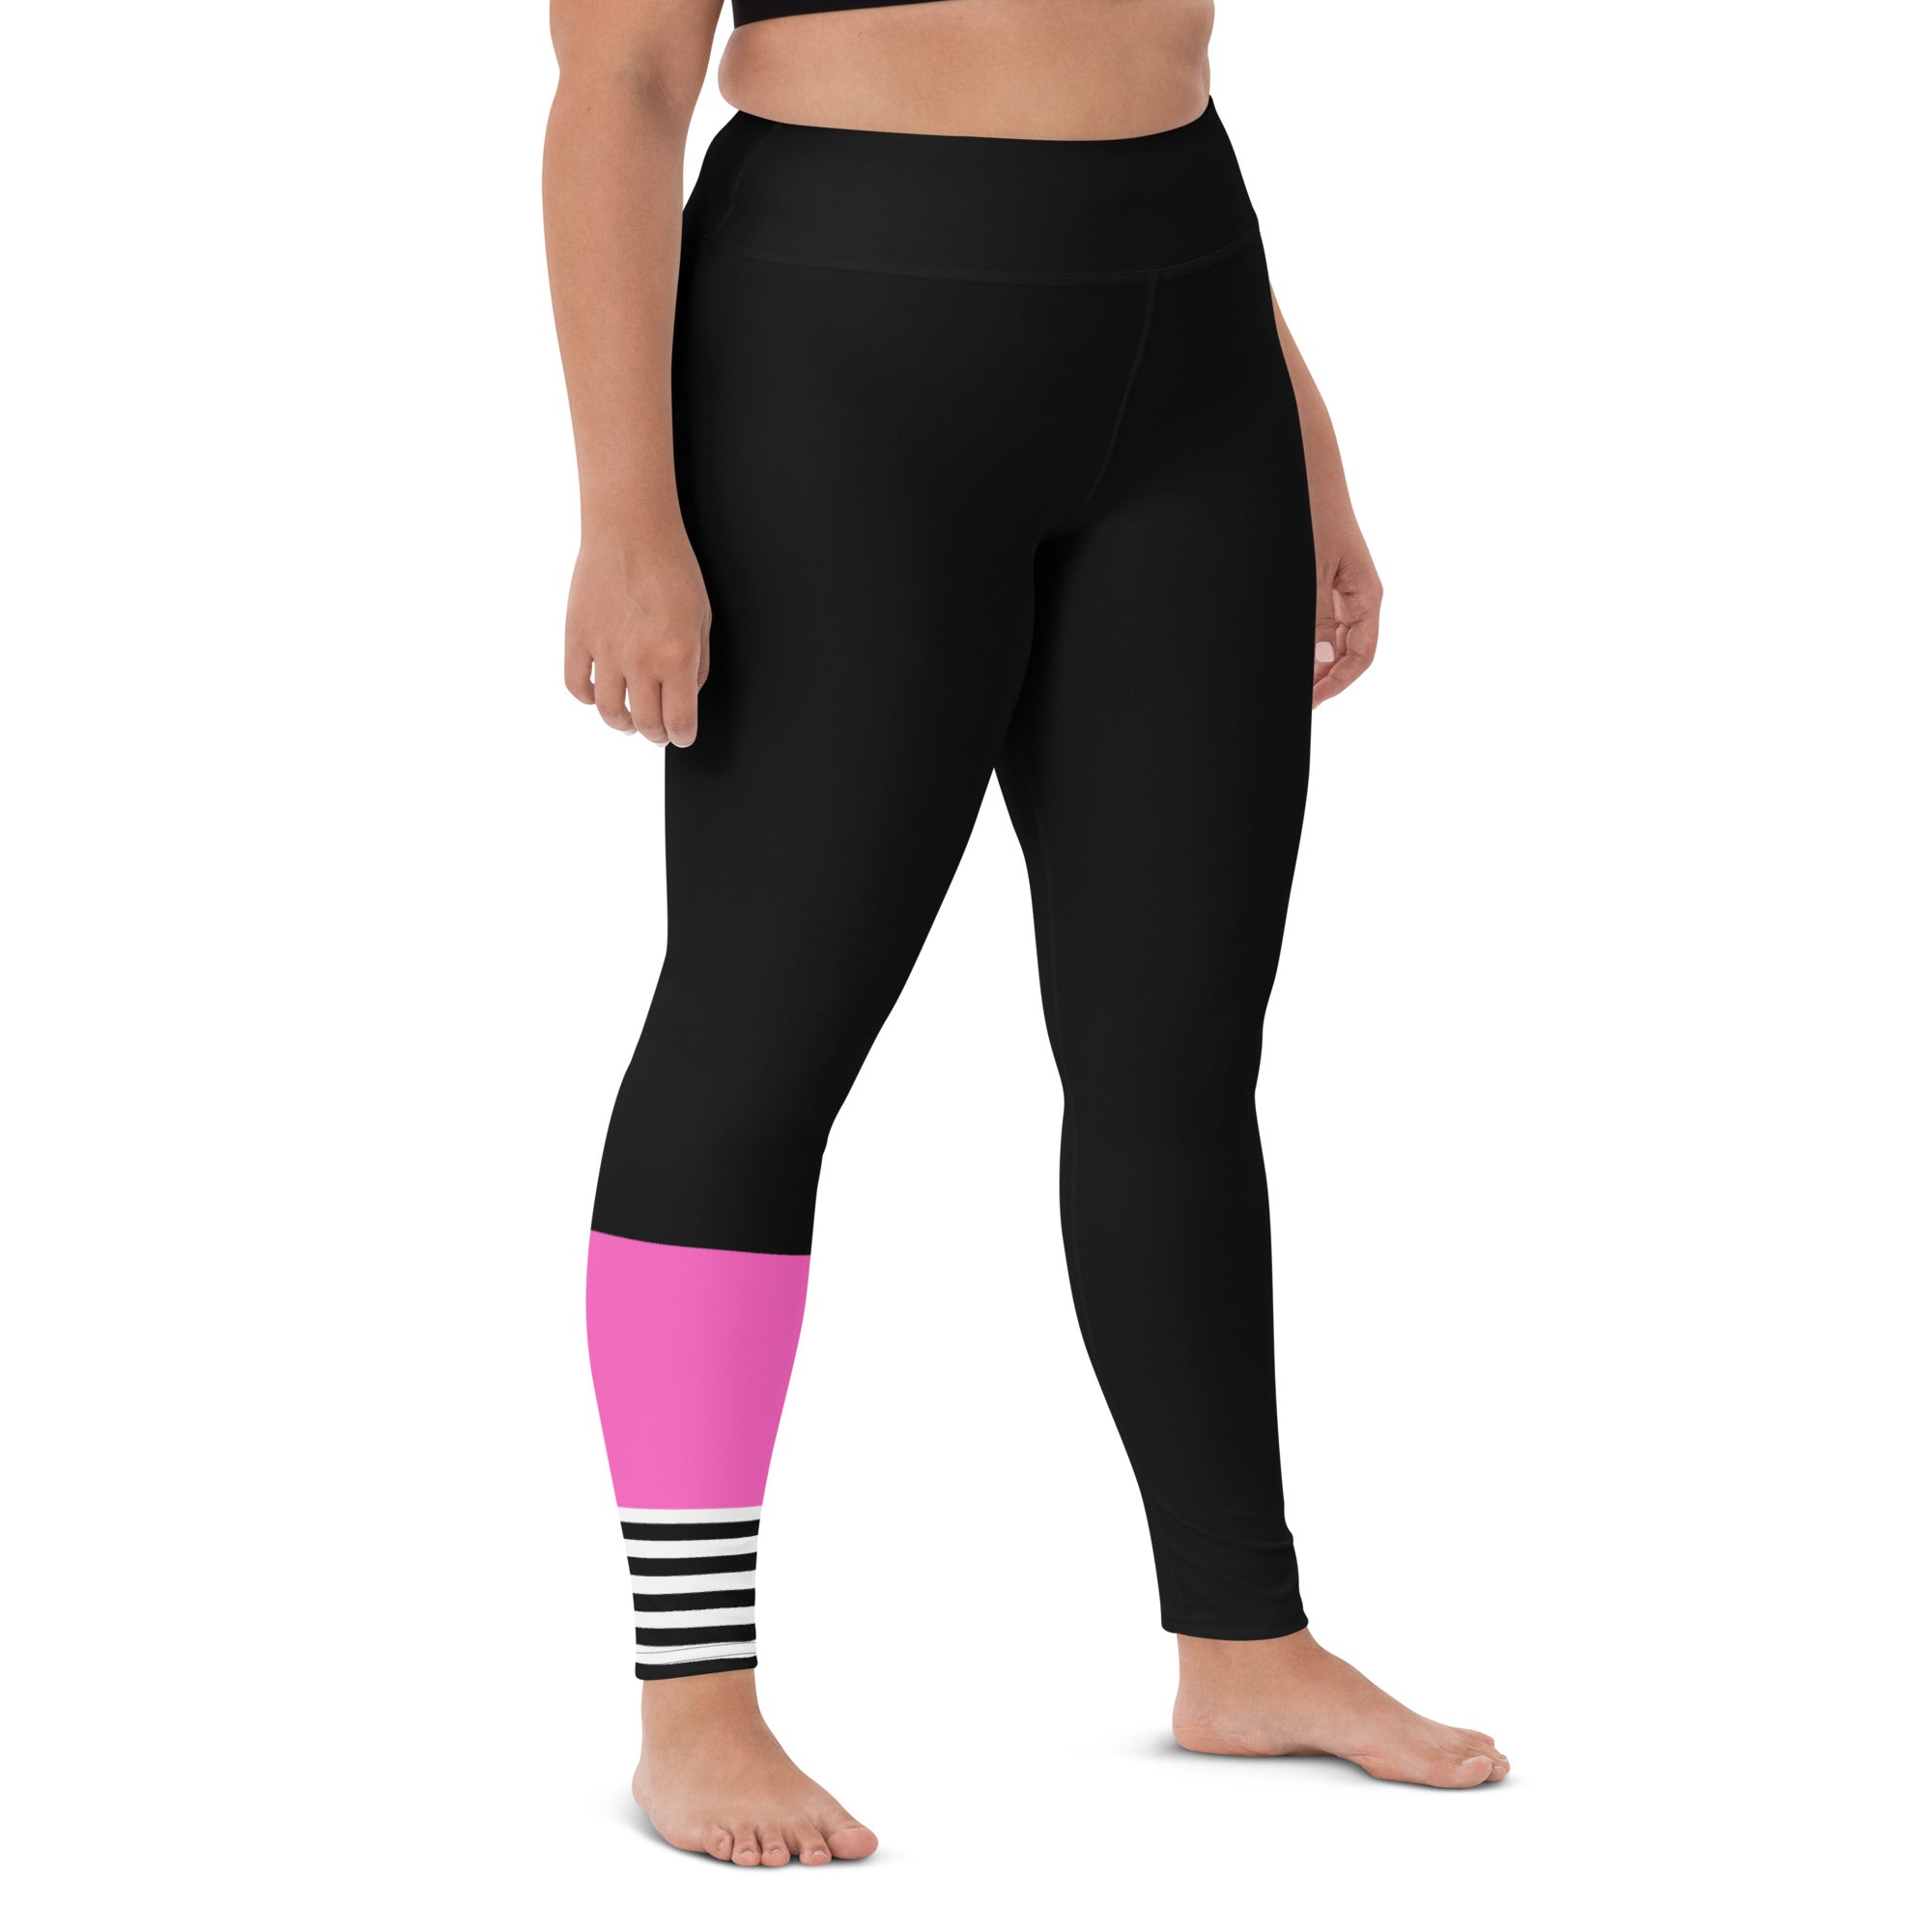 Women's Surf SUP Swim Leggings, UPF 50 - Sporty Black Pink